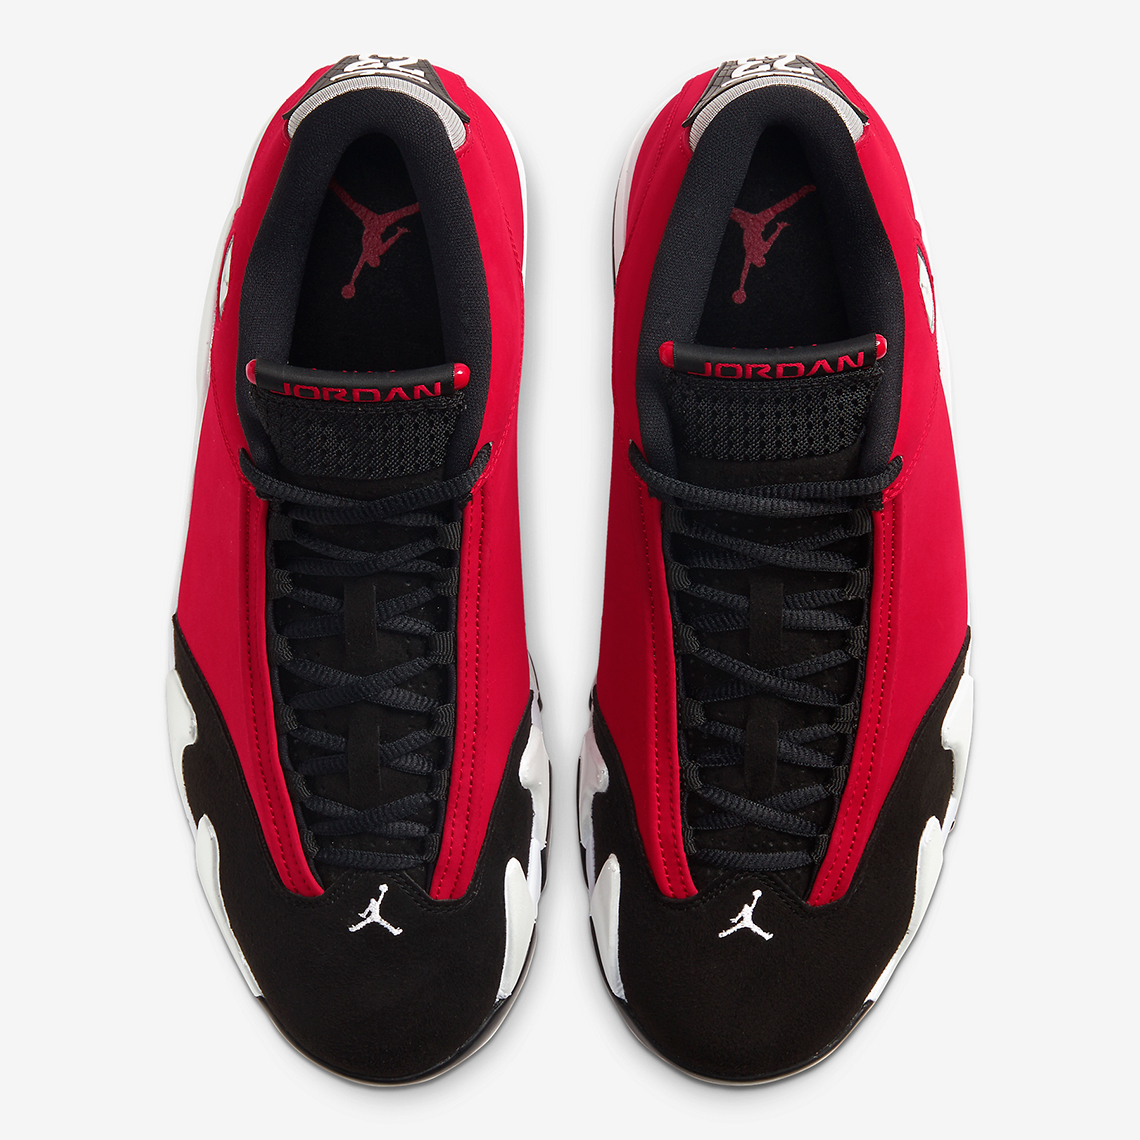 Jordan 14 Gym Red Black 487471 006 Release Date 4